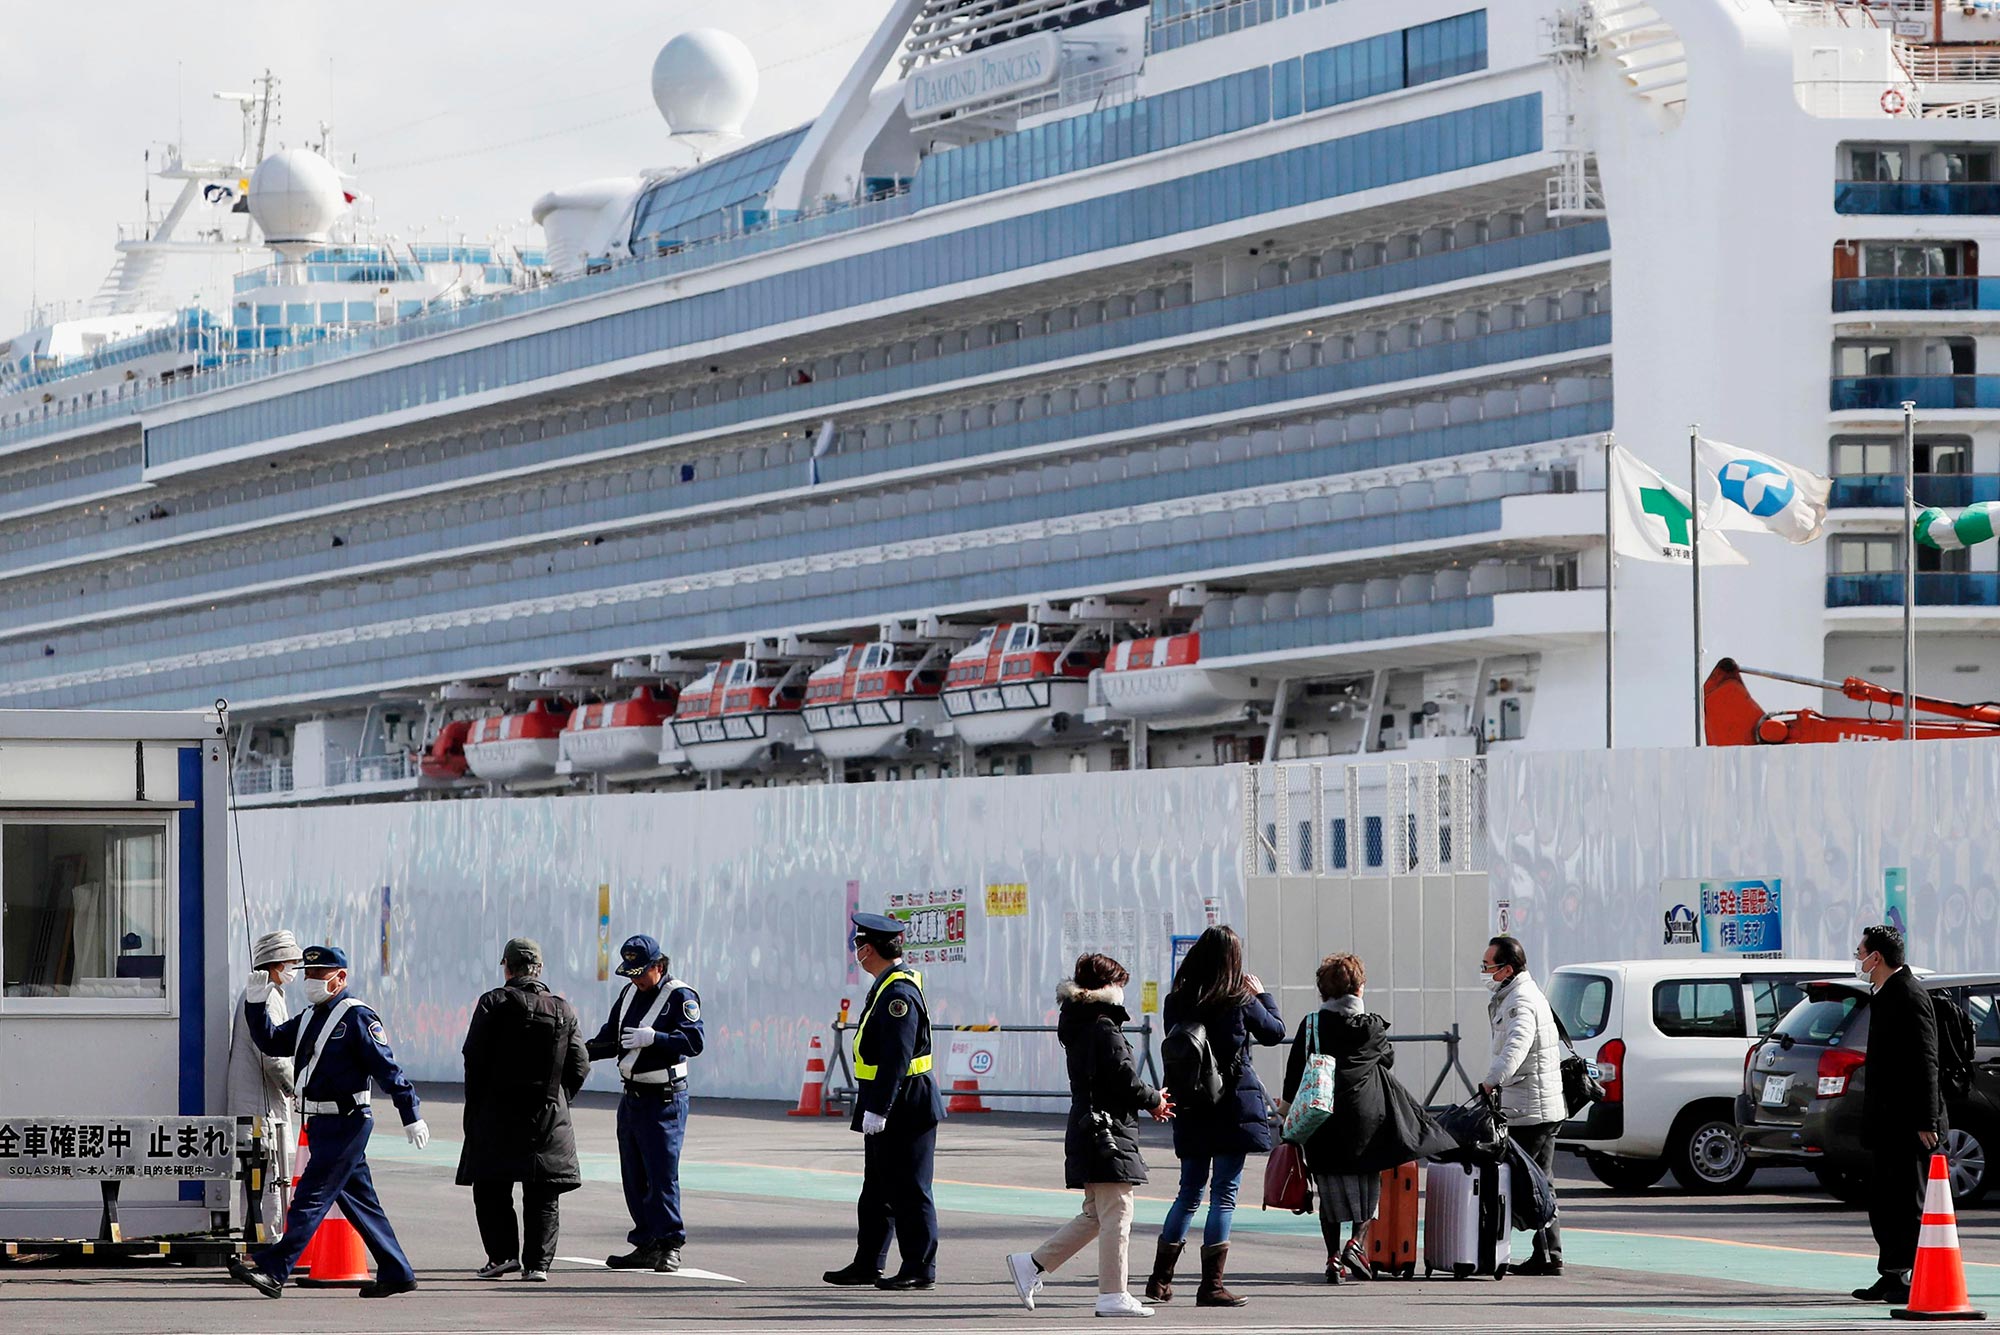 A photo of passengers on the coronavirus-infected Diamond Princess cruise ship .